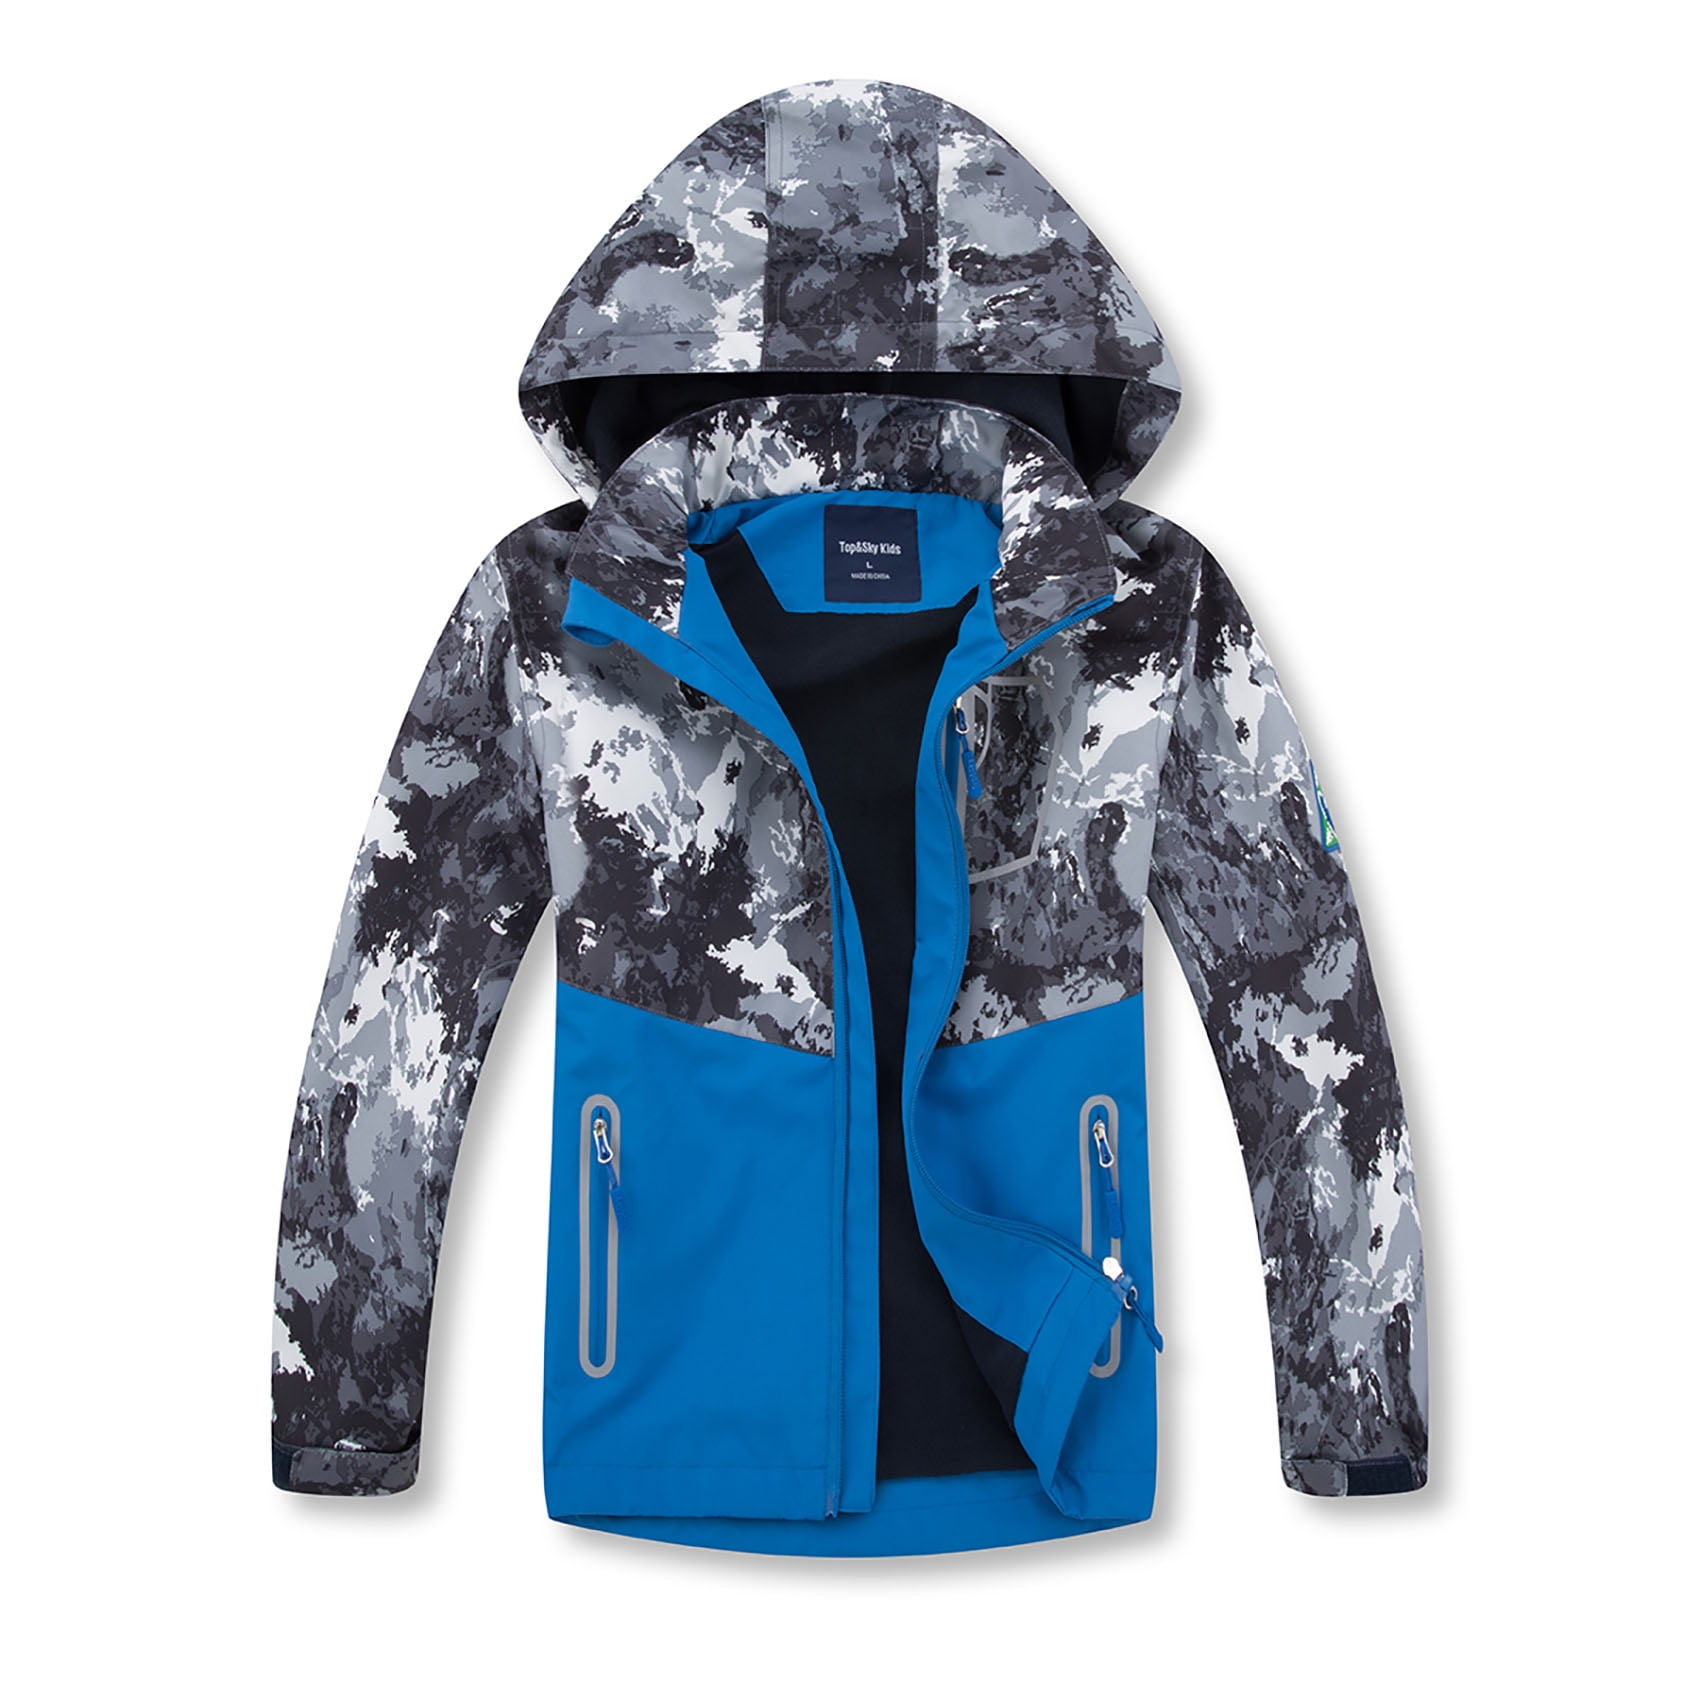 Boys Rain Jackets Lightweight Waterproof Hooded Raincoats Windbreakers with Cotton Lined for Kids 